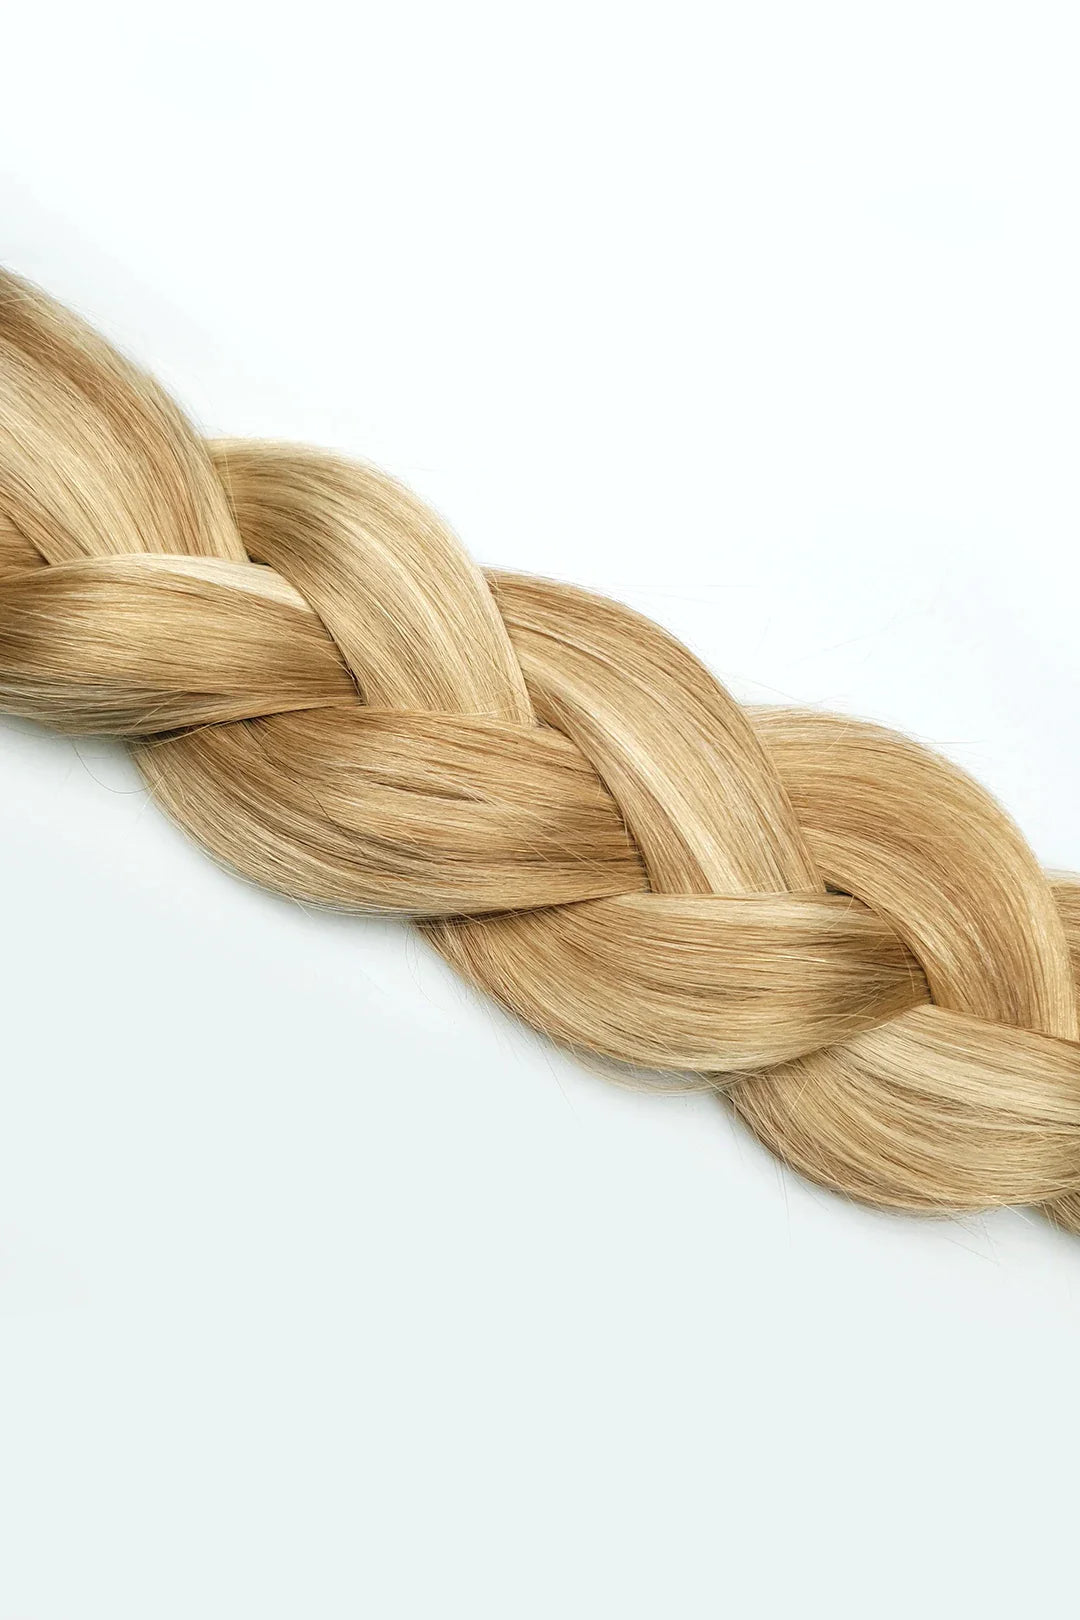 Licht blonde highlights clip-in hairextensions ☀️ 30cm - 230g